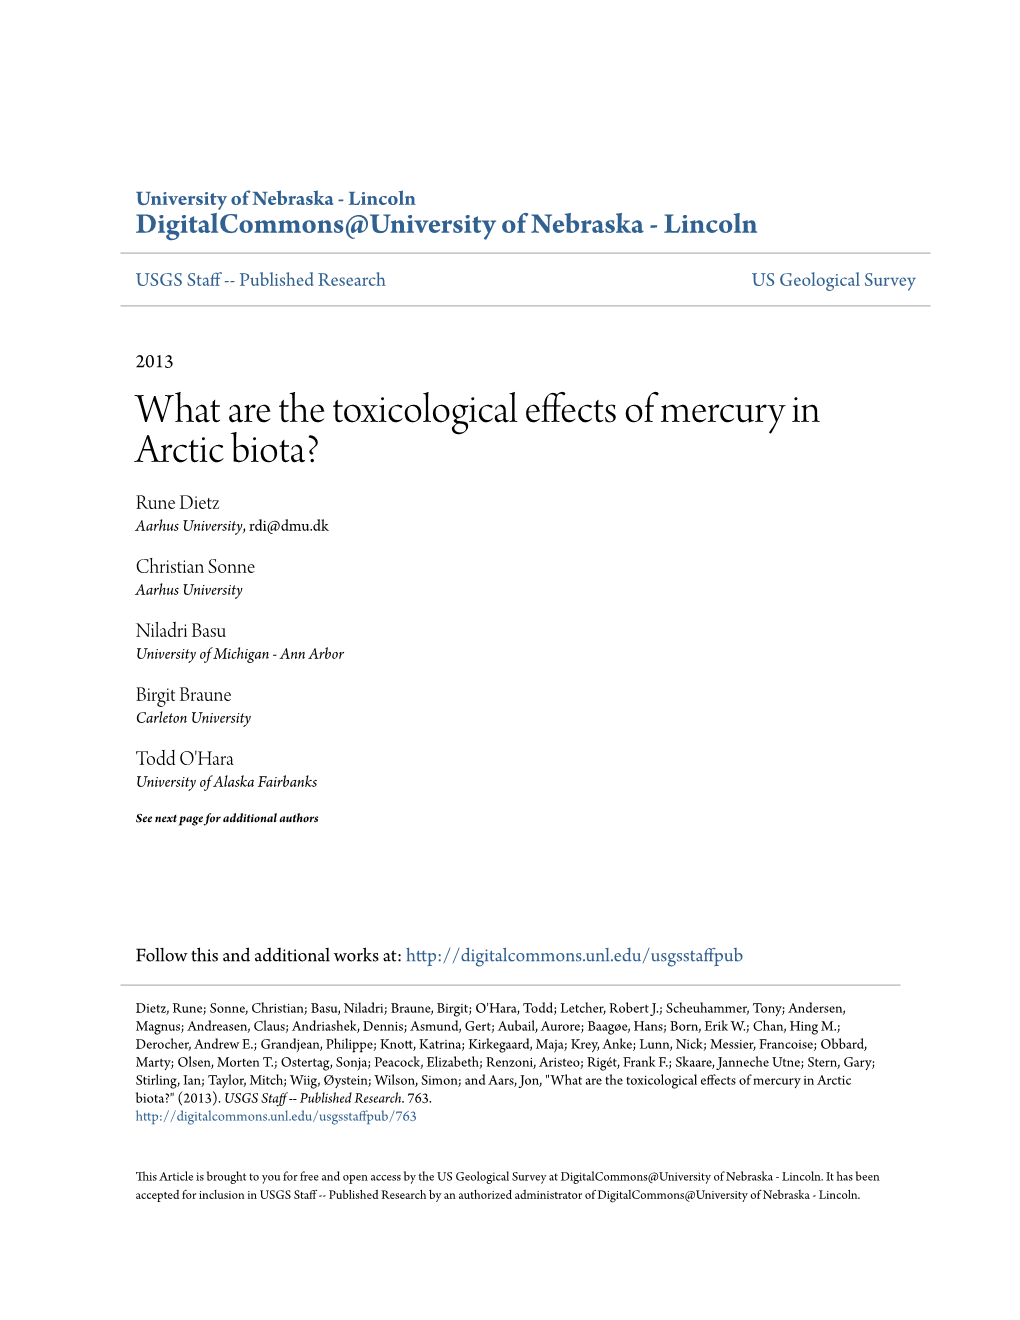 What Are the Toxicological Effects of Mercury in Arctic Biota? Rune Dietz Aarhus University, Rdi@Dmu.Dk